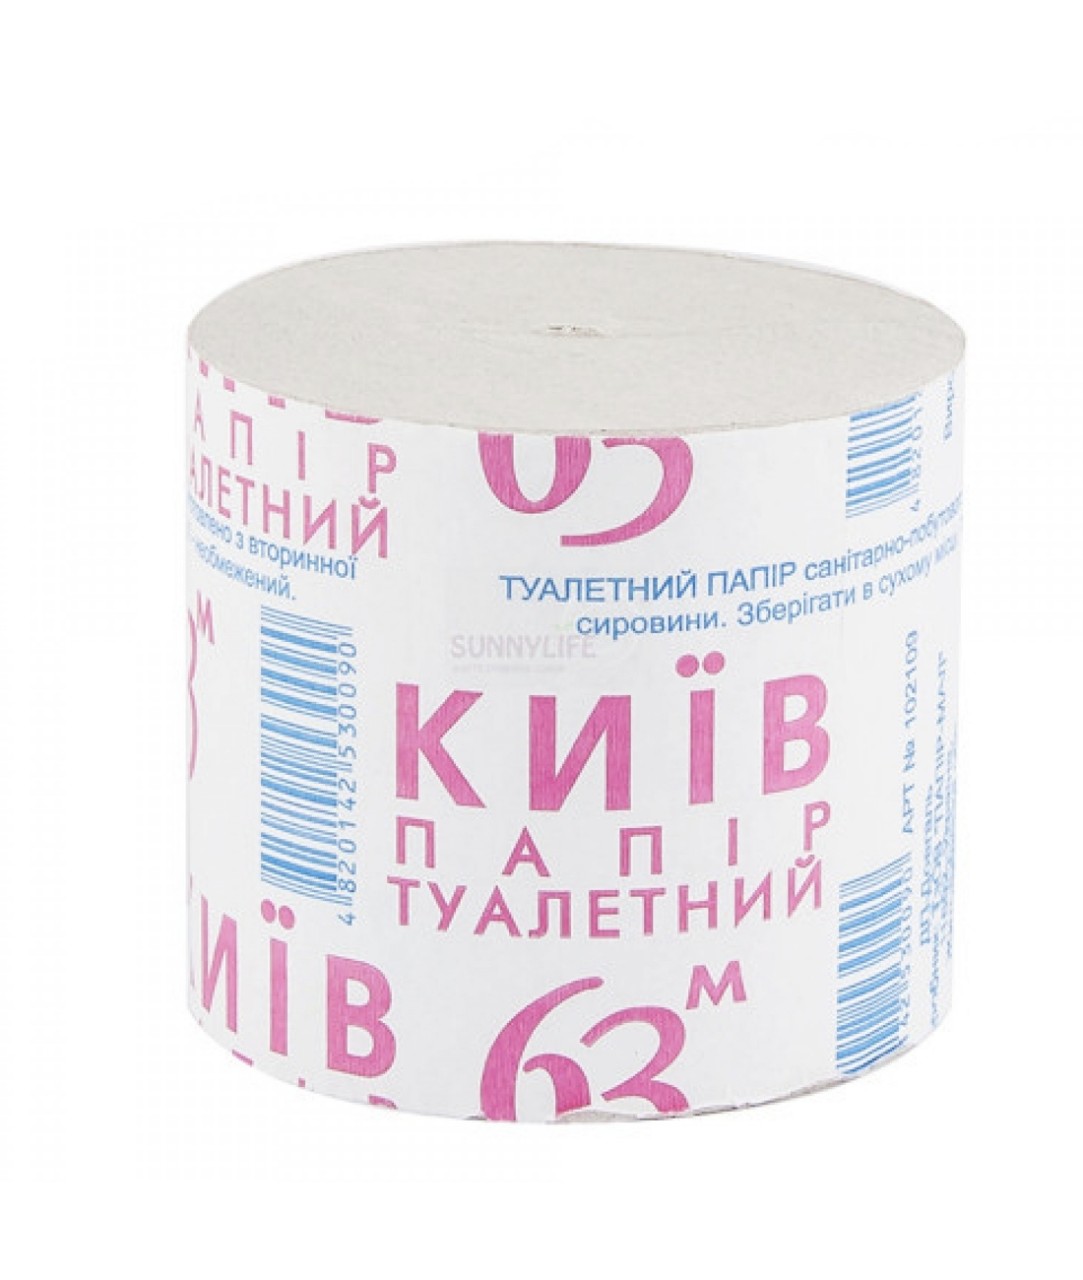 Бумага туалетная Киев 63 м однослойная 8 шт/уп